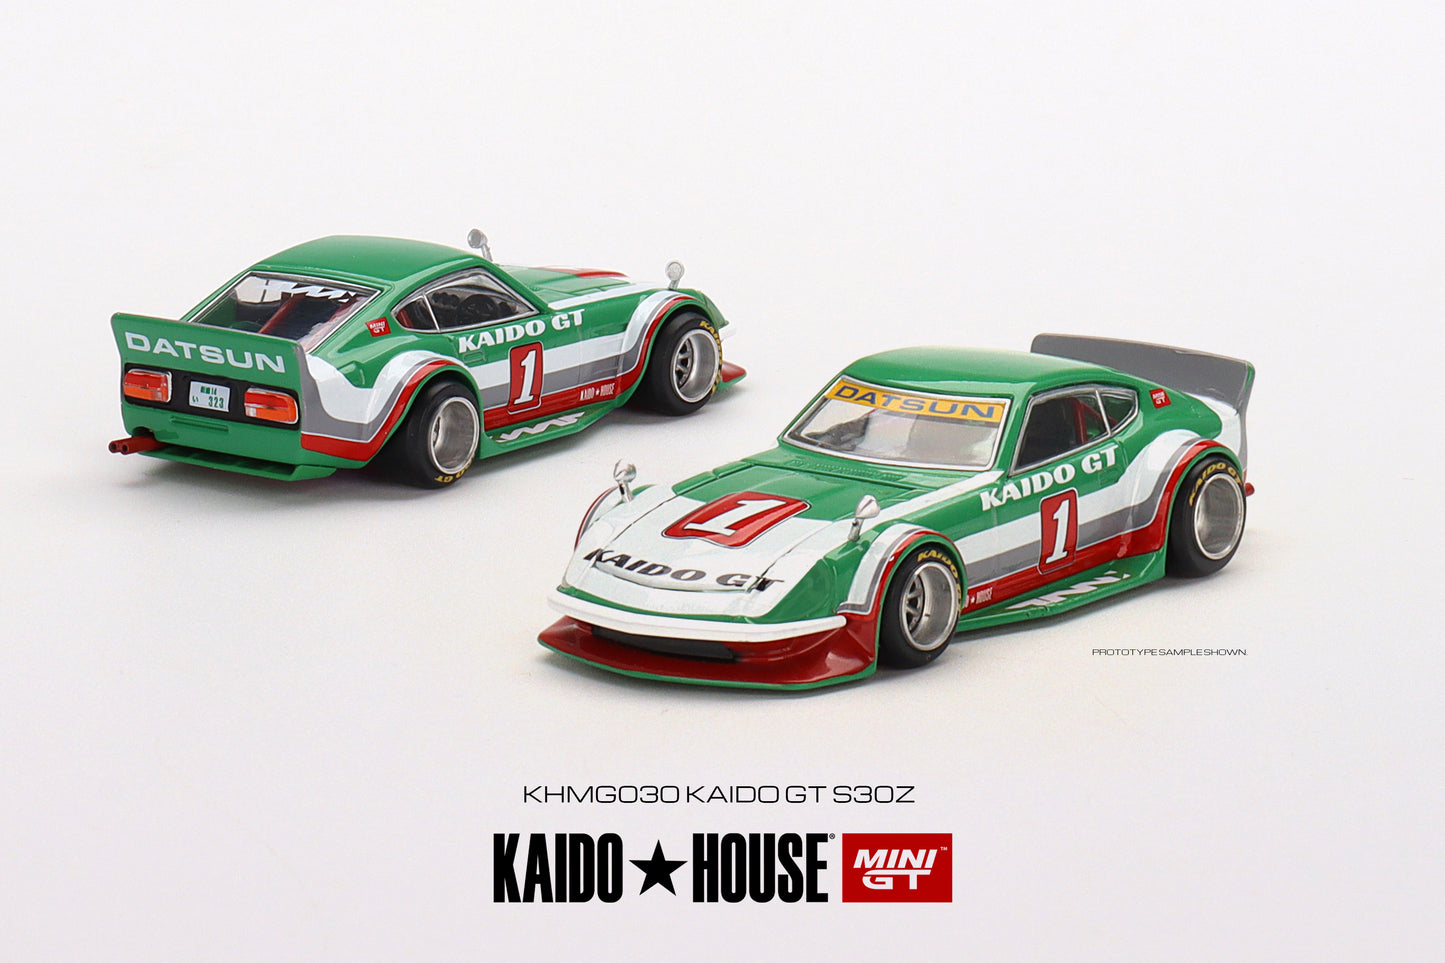 Mini GT Kaido House 030 Datsun Fairlady Z V2 Green White Red 1:64